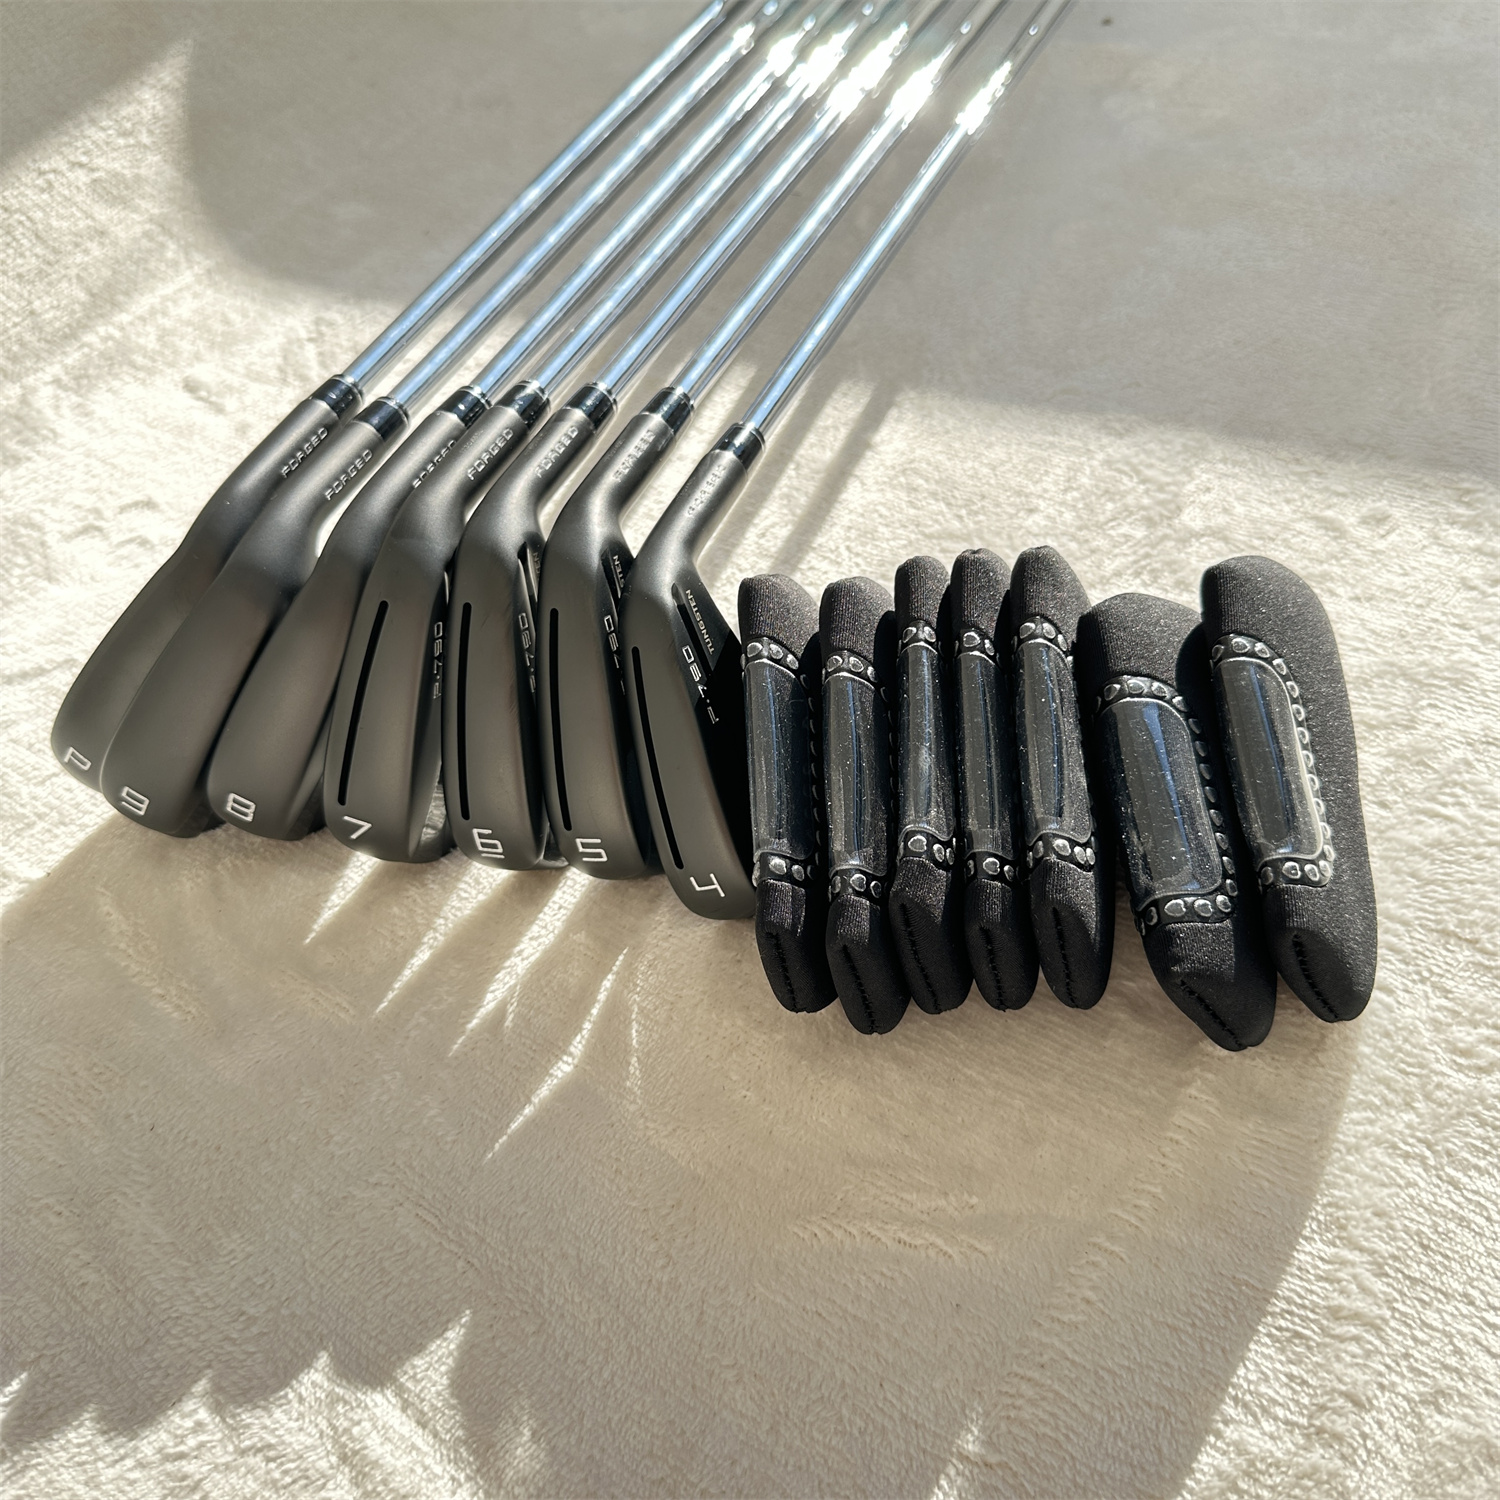 

Men's Golf Iron black Golf Club Irons Set Forged Golf Clubs 456789P Regular/Stiff Steel/Graphite Shafts Headcovers